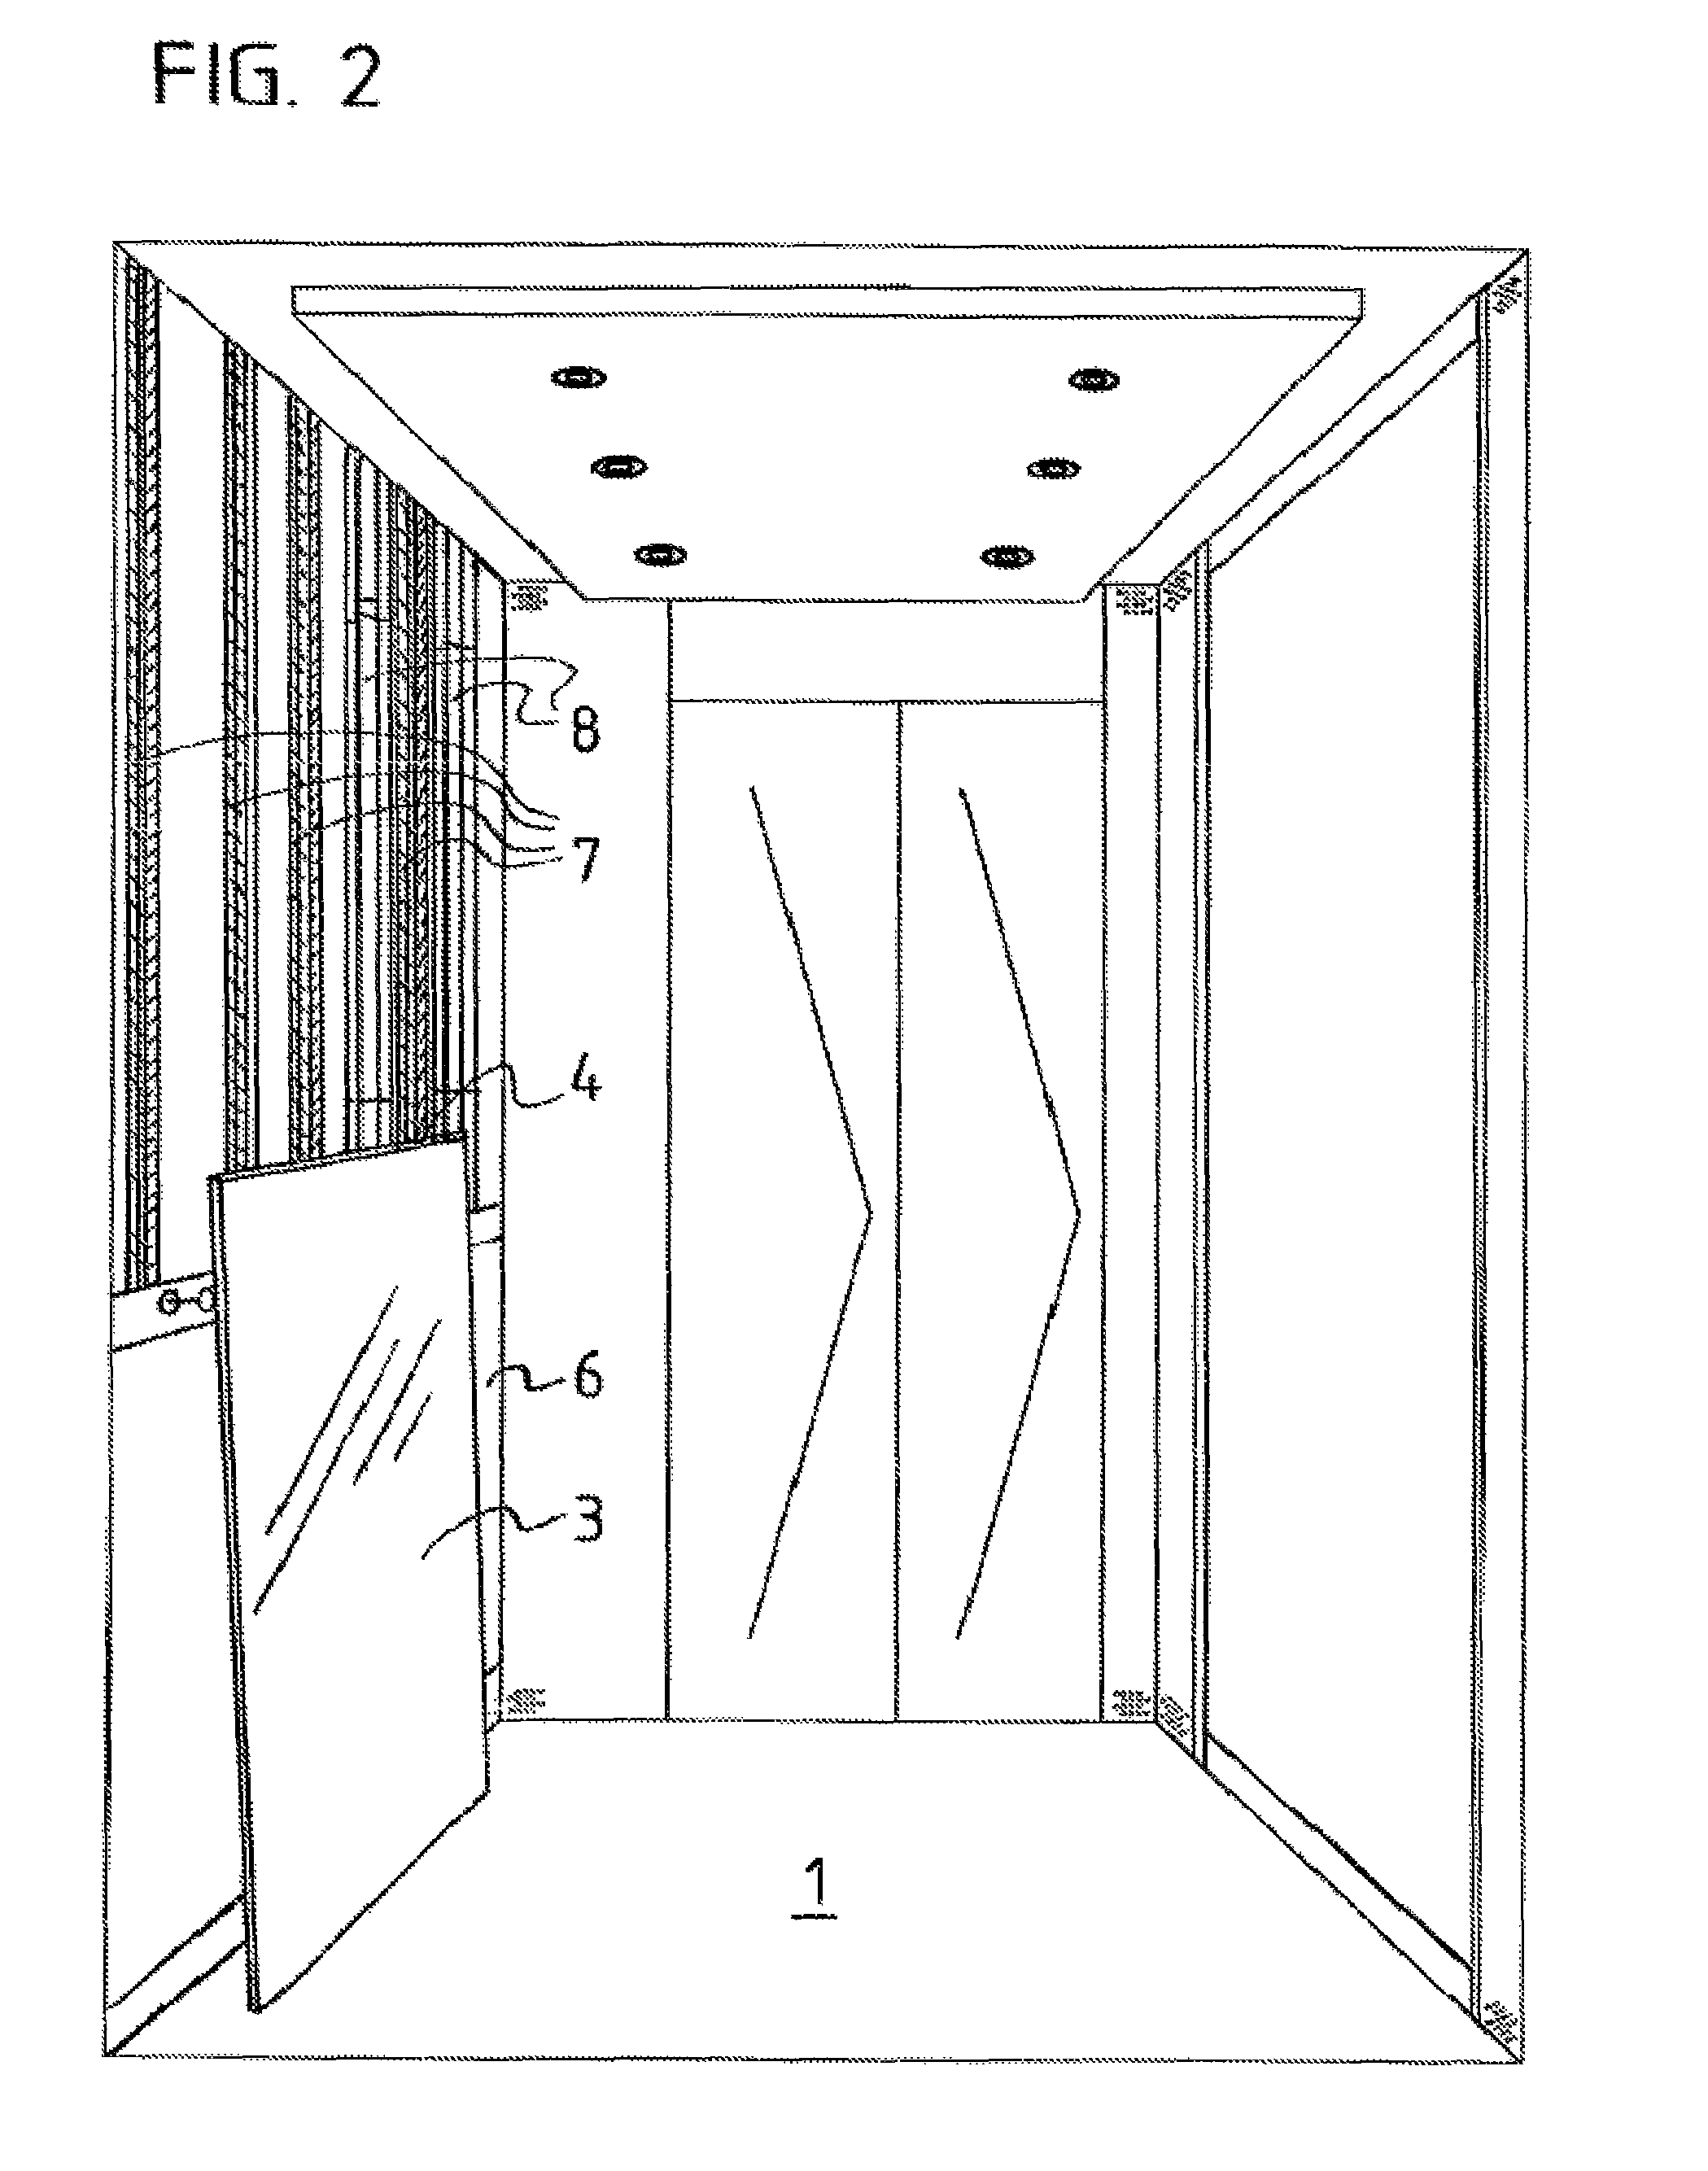 Elevator car with maintenance window